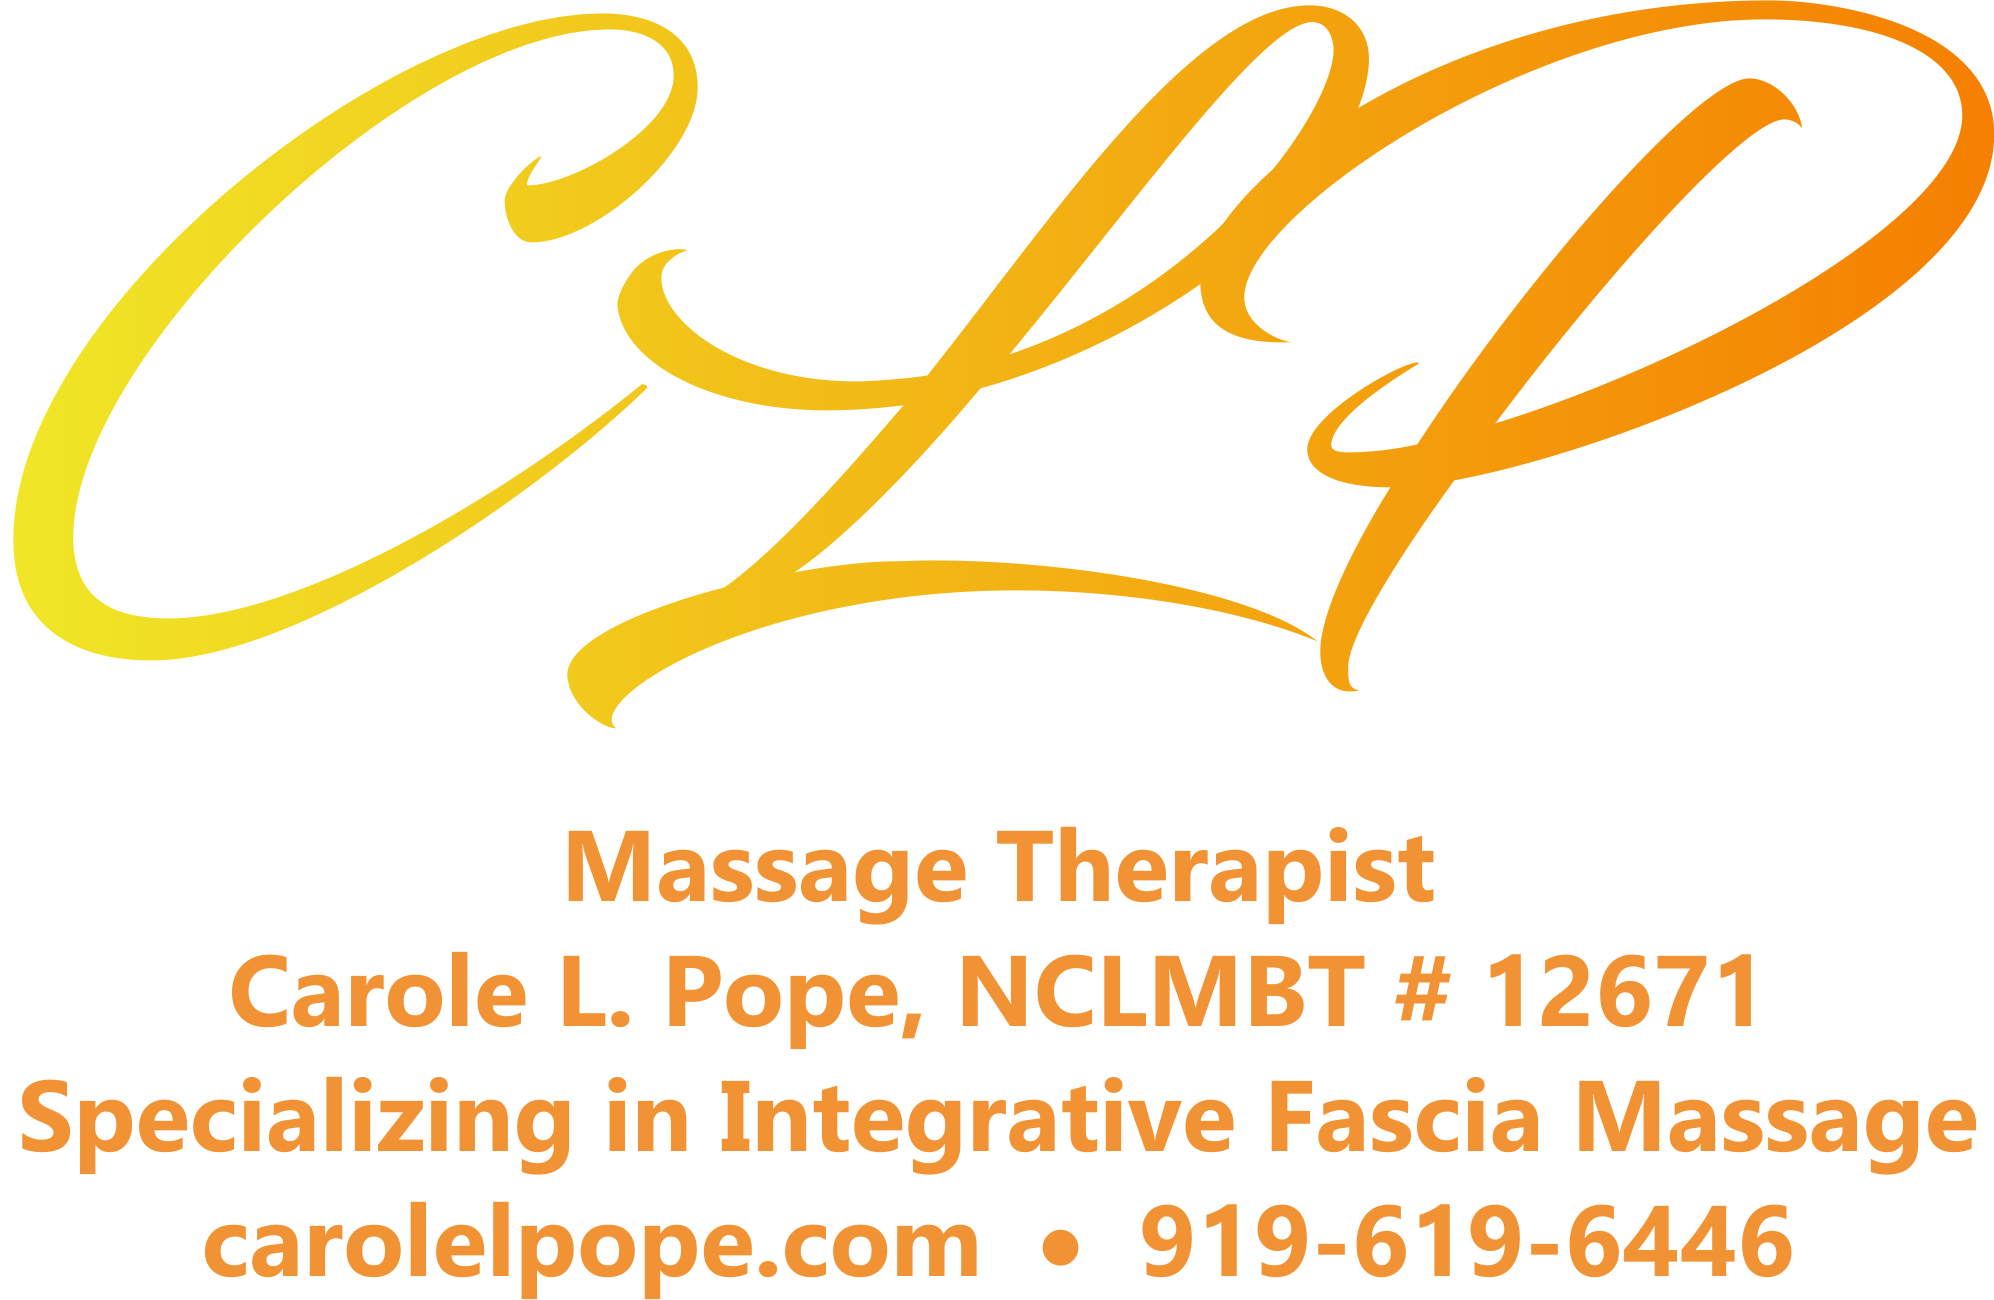 Licensed Massage and Bodywork Therapist # 12671